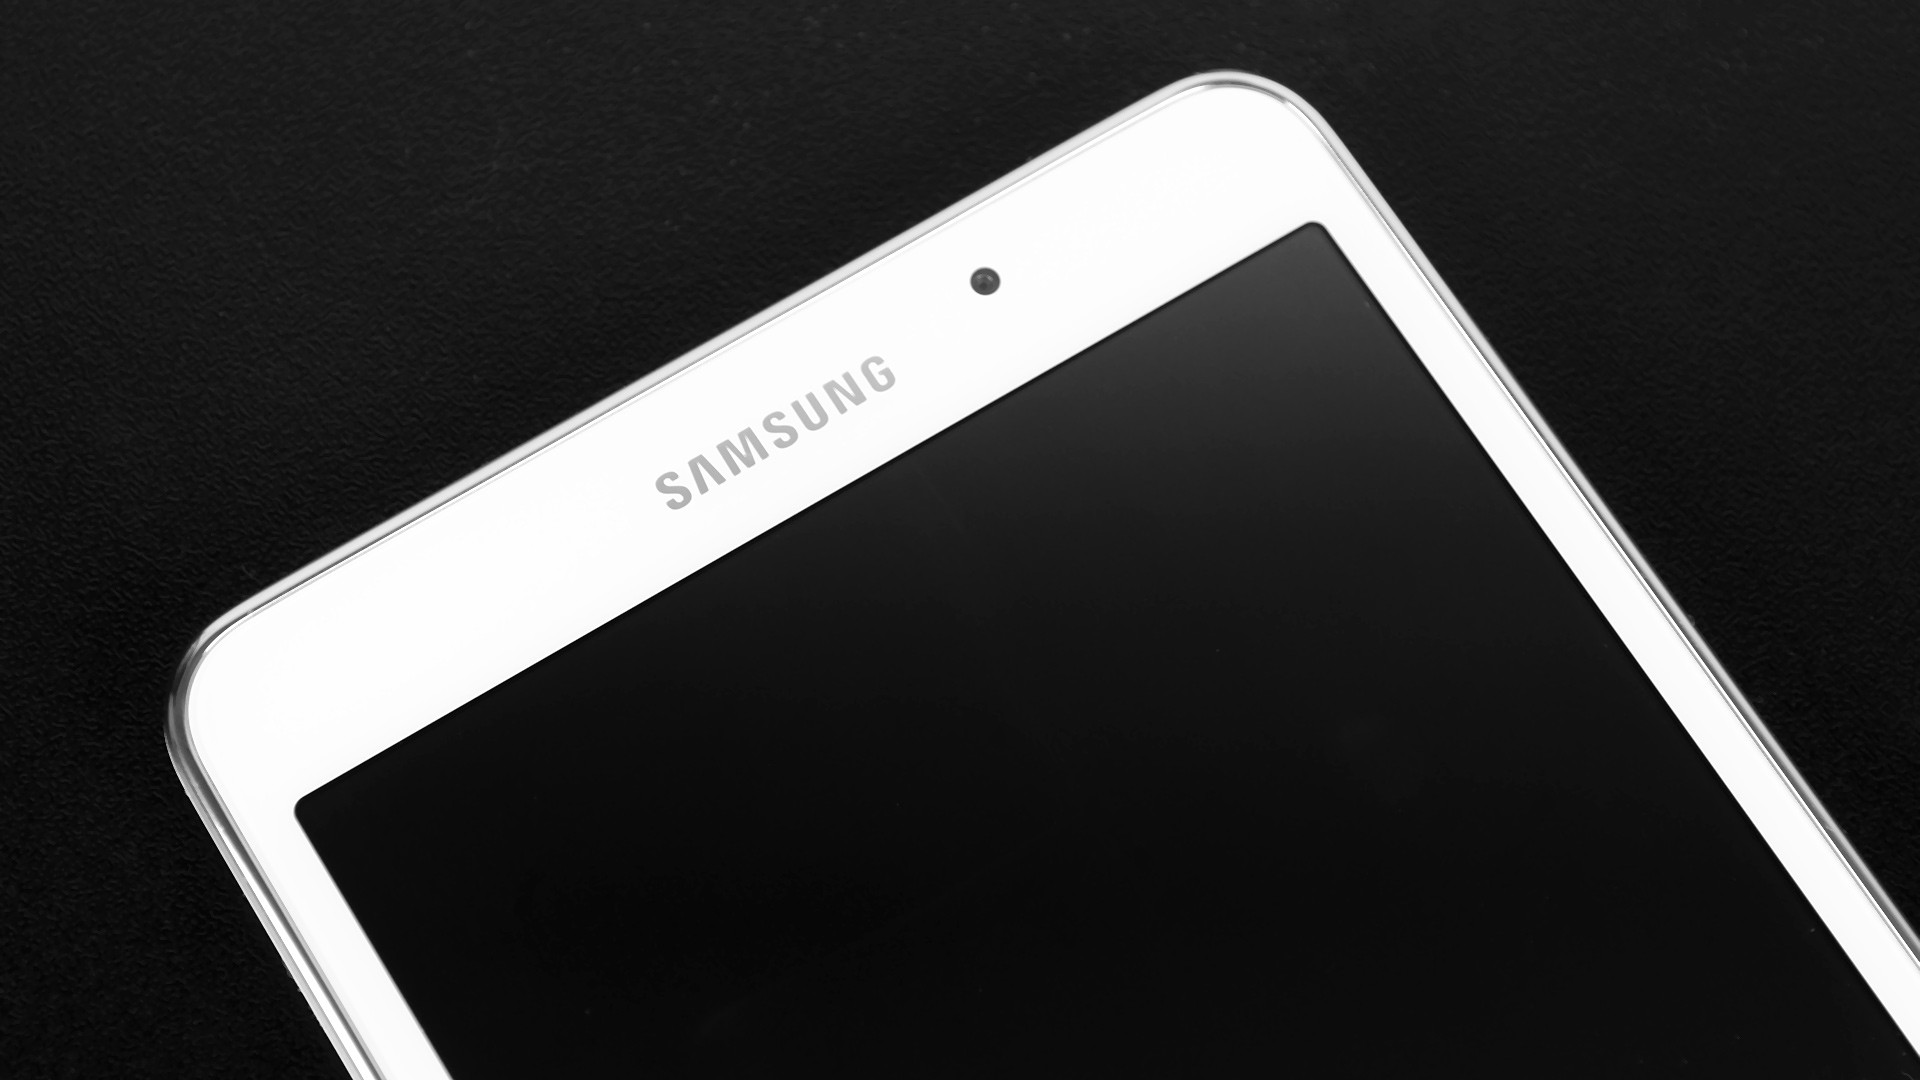 Samsung Galaxy Tab 7.0 Review